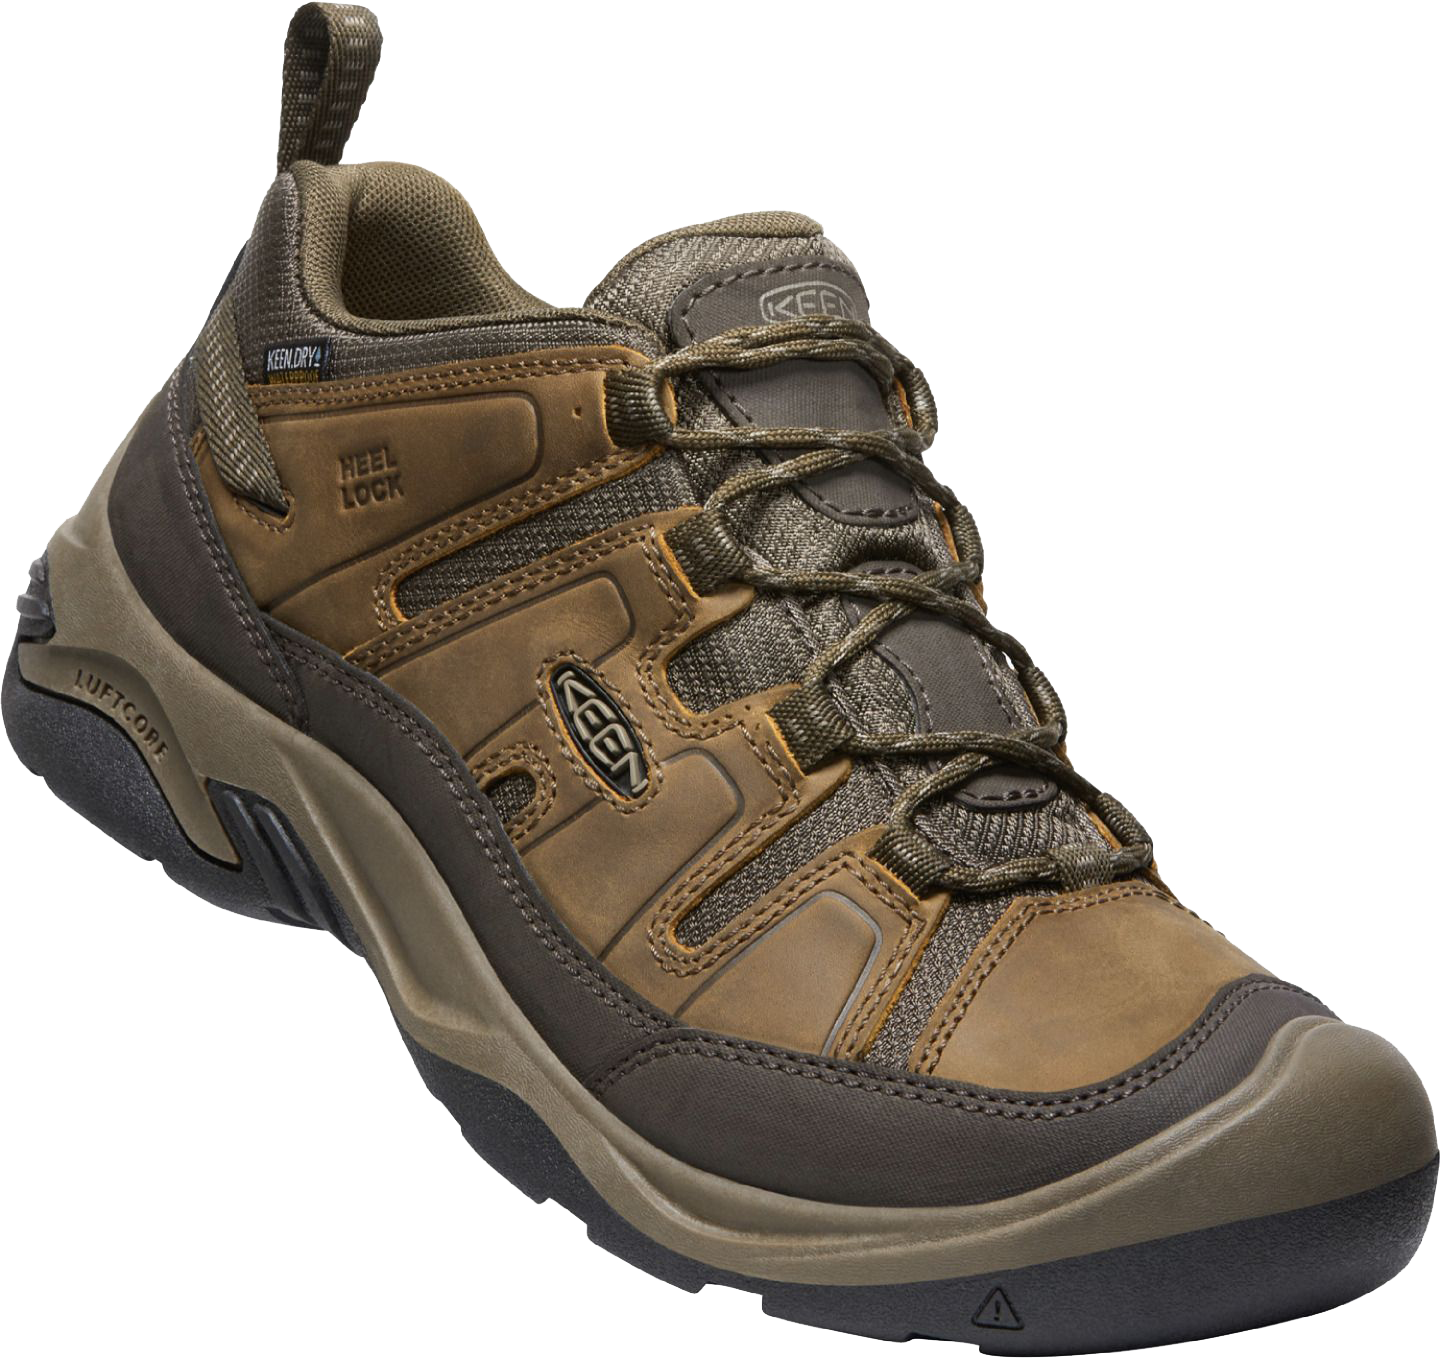 KEEN Circadia Low WP Waterproof Hiking Shoes for Men - Shitake/Brindle - 8W